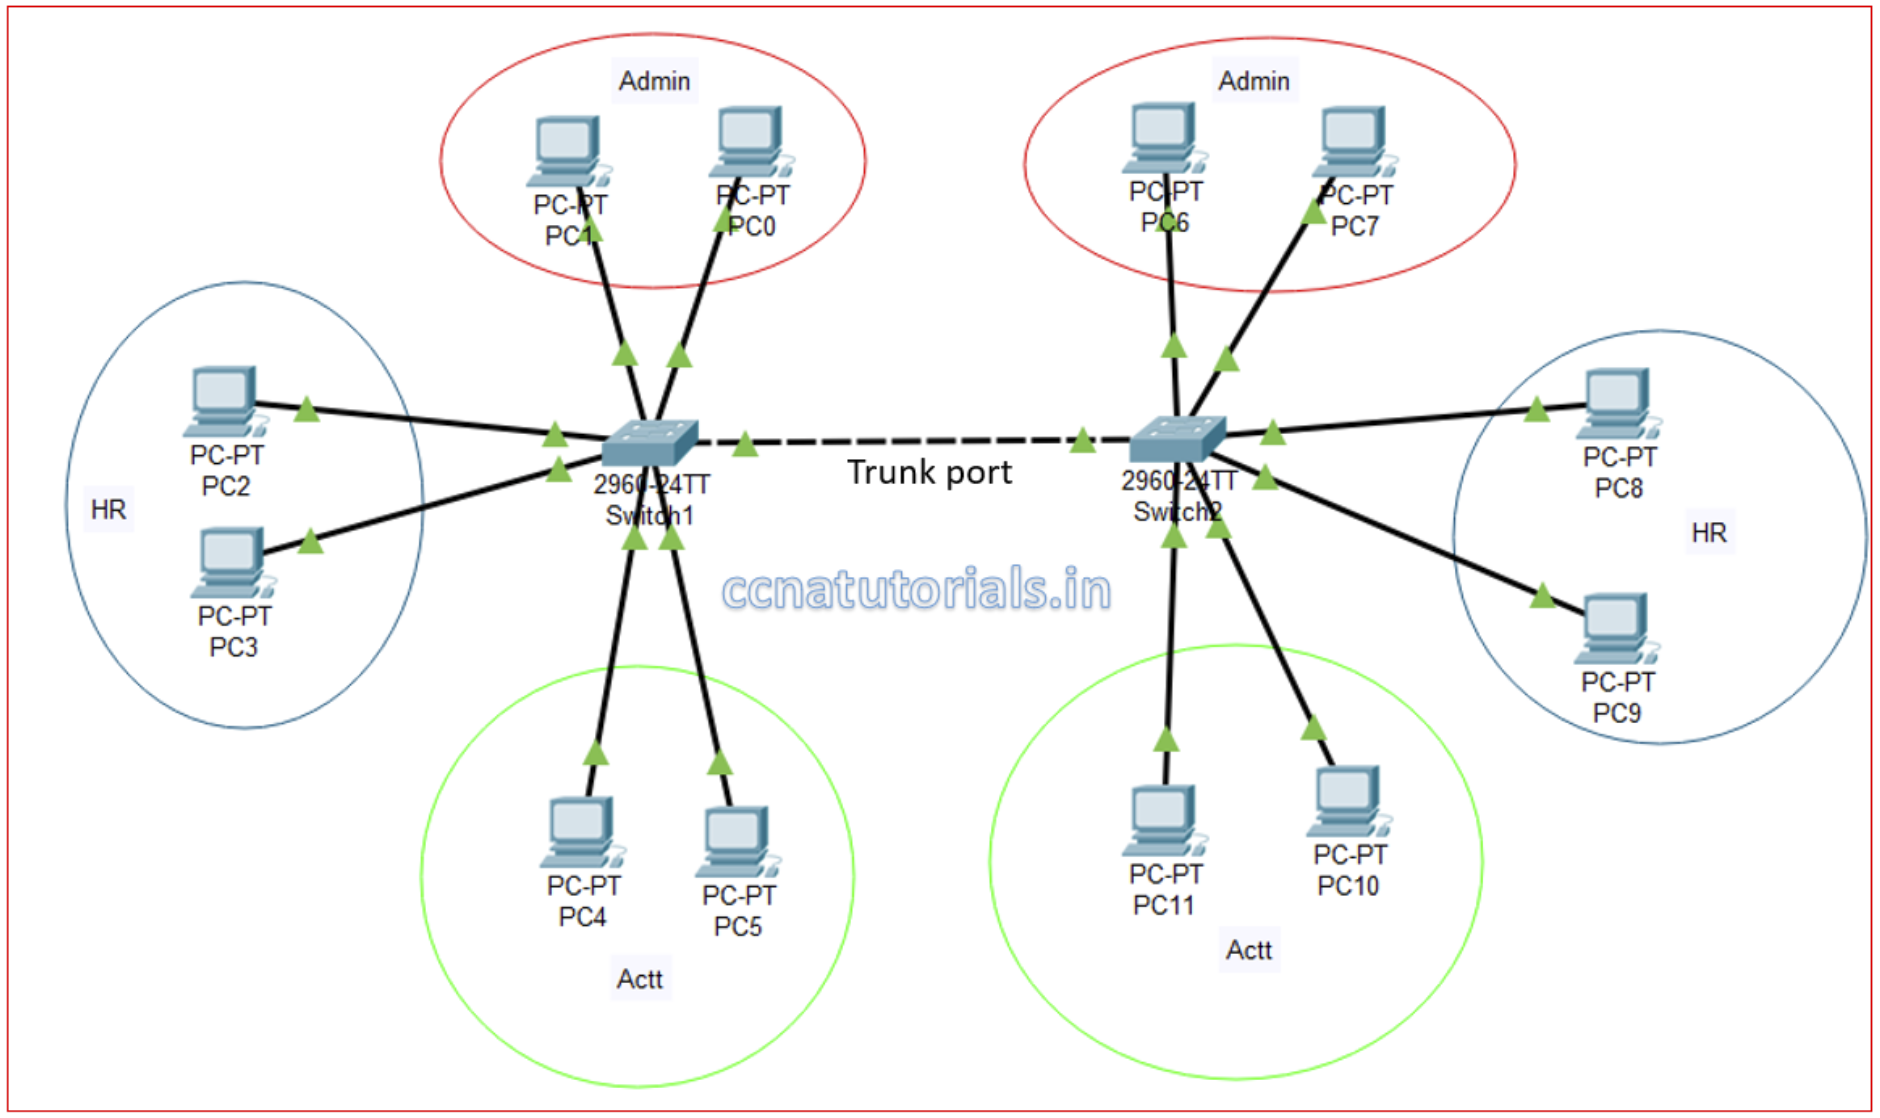 Voice vlan. Inter VLAN routing. Схема сети с VLAN. Транк порт. Отображение VLAN.